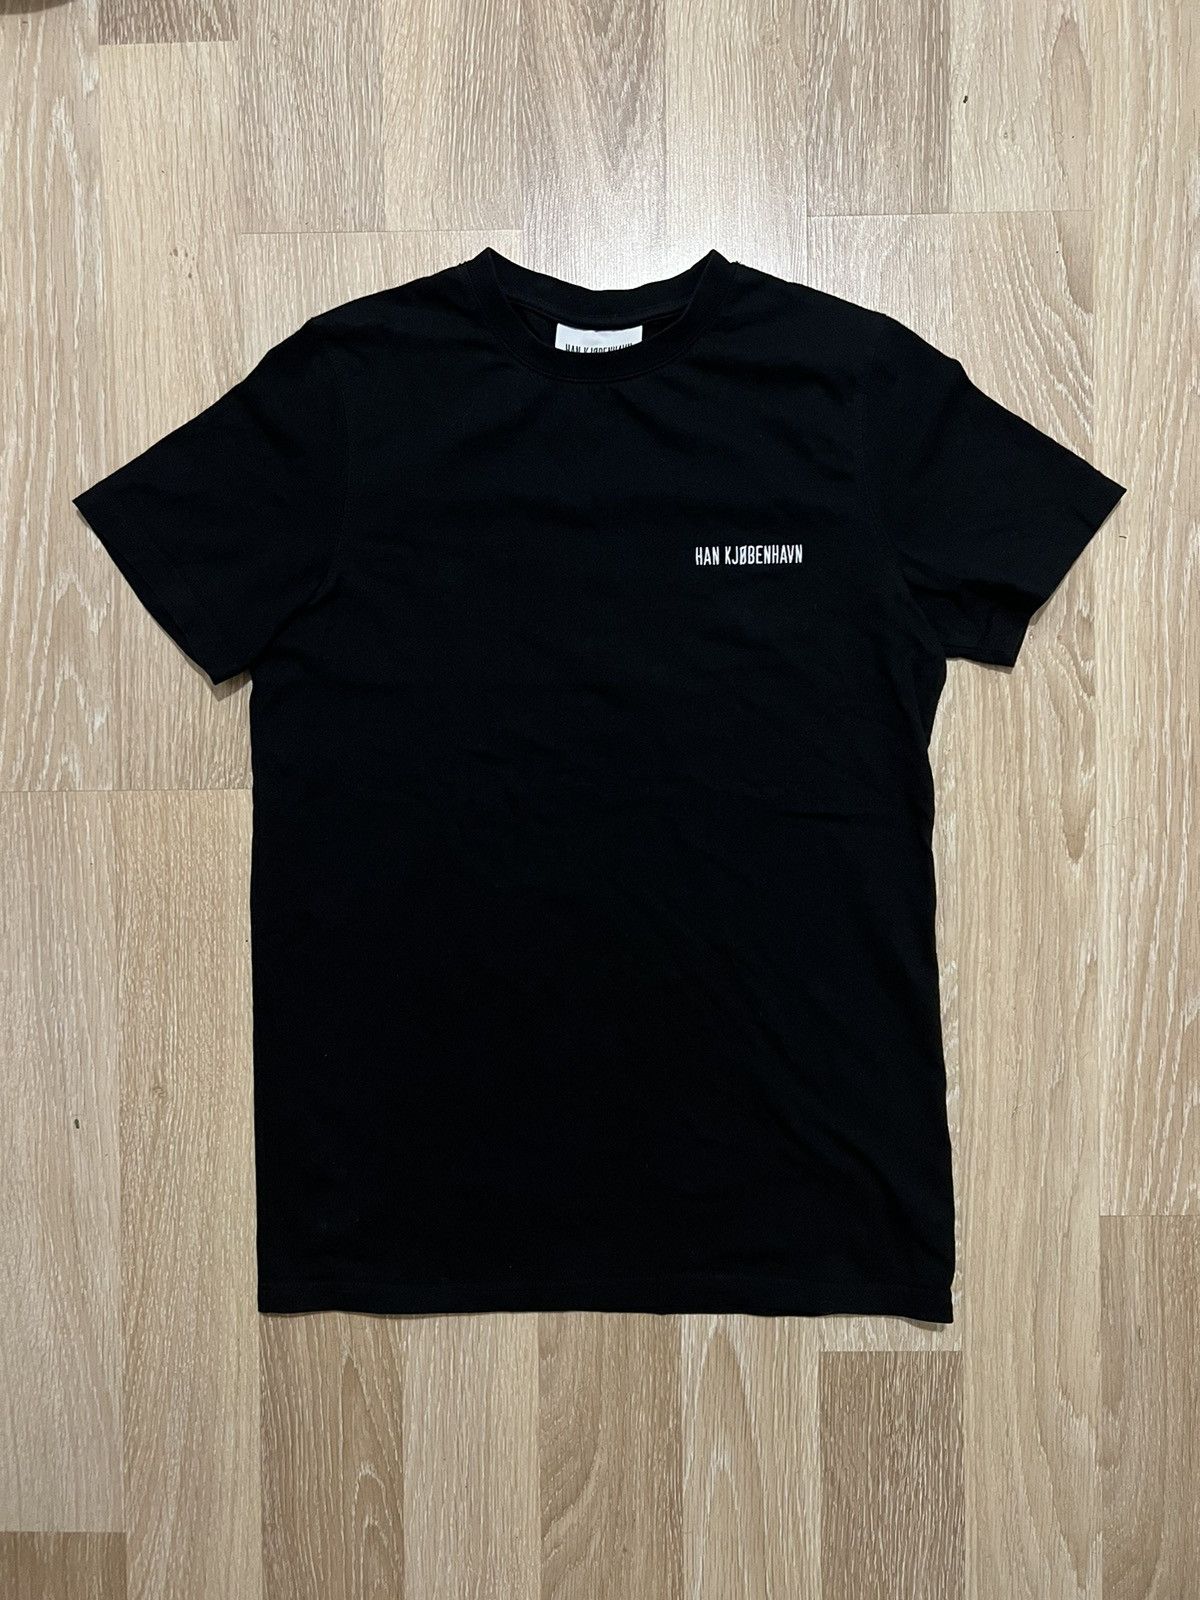 Pre-owned Acne Studios Han Kjøbenhavn Ss20 Casual T-shirt In Black